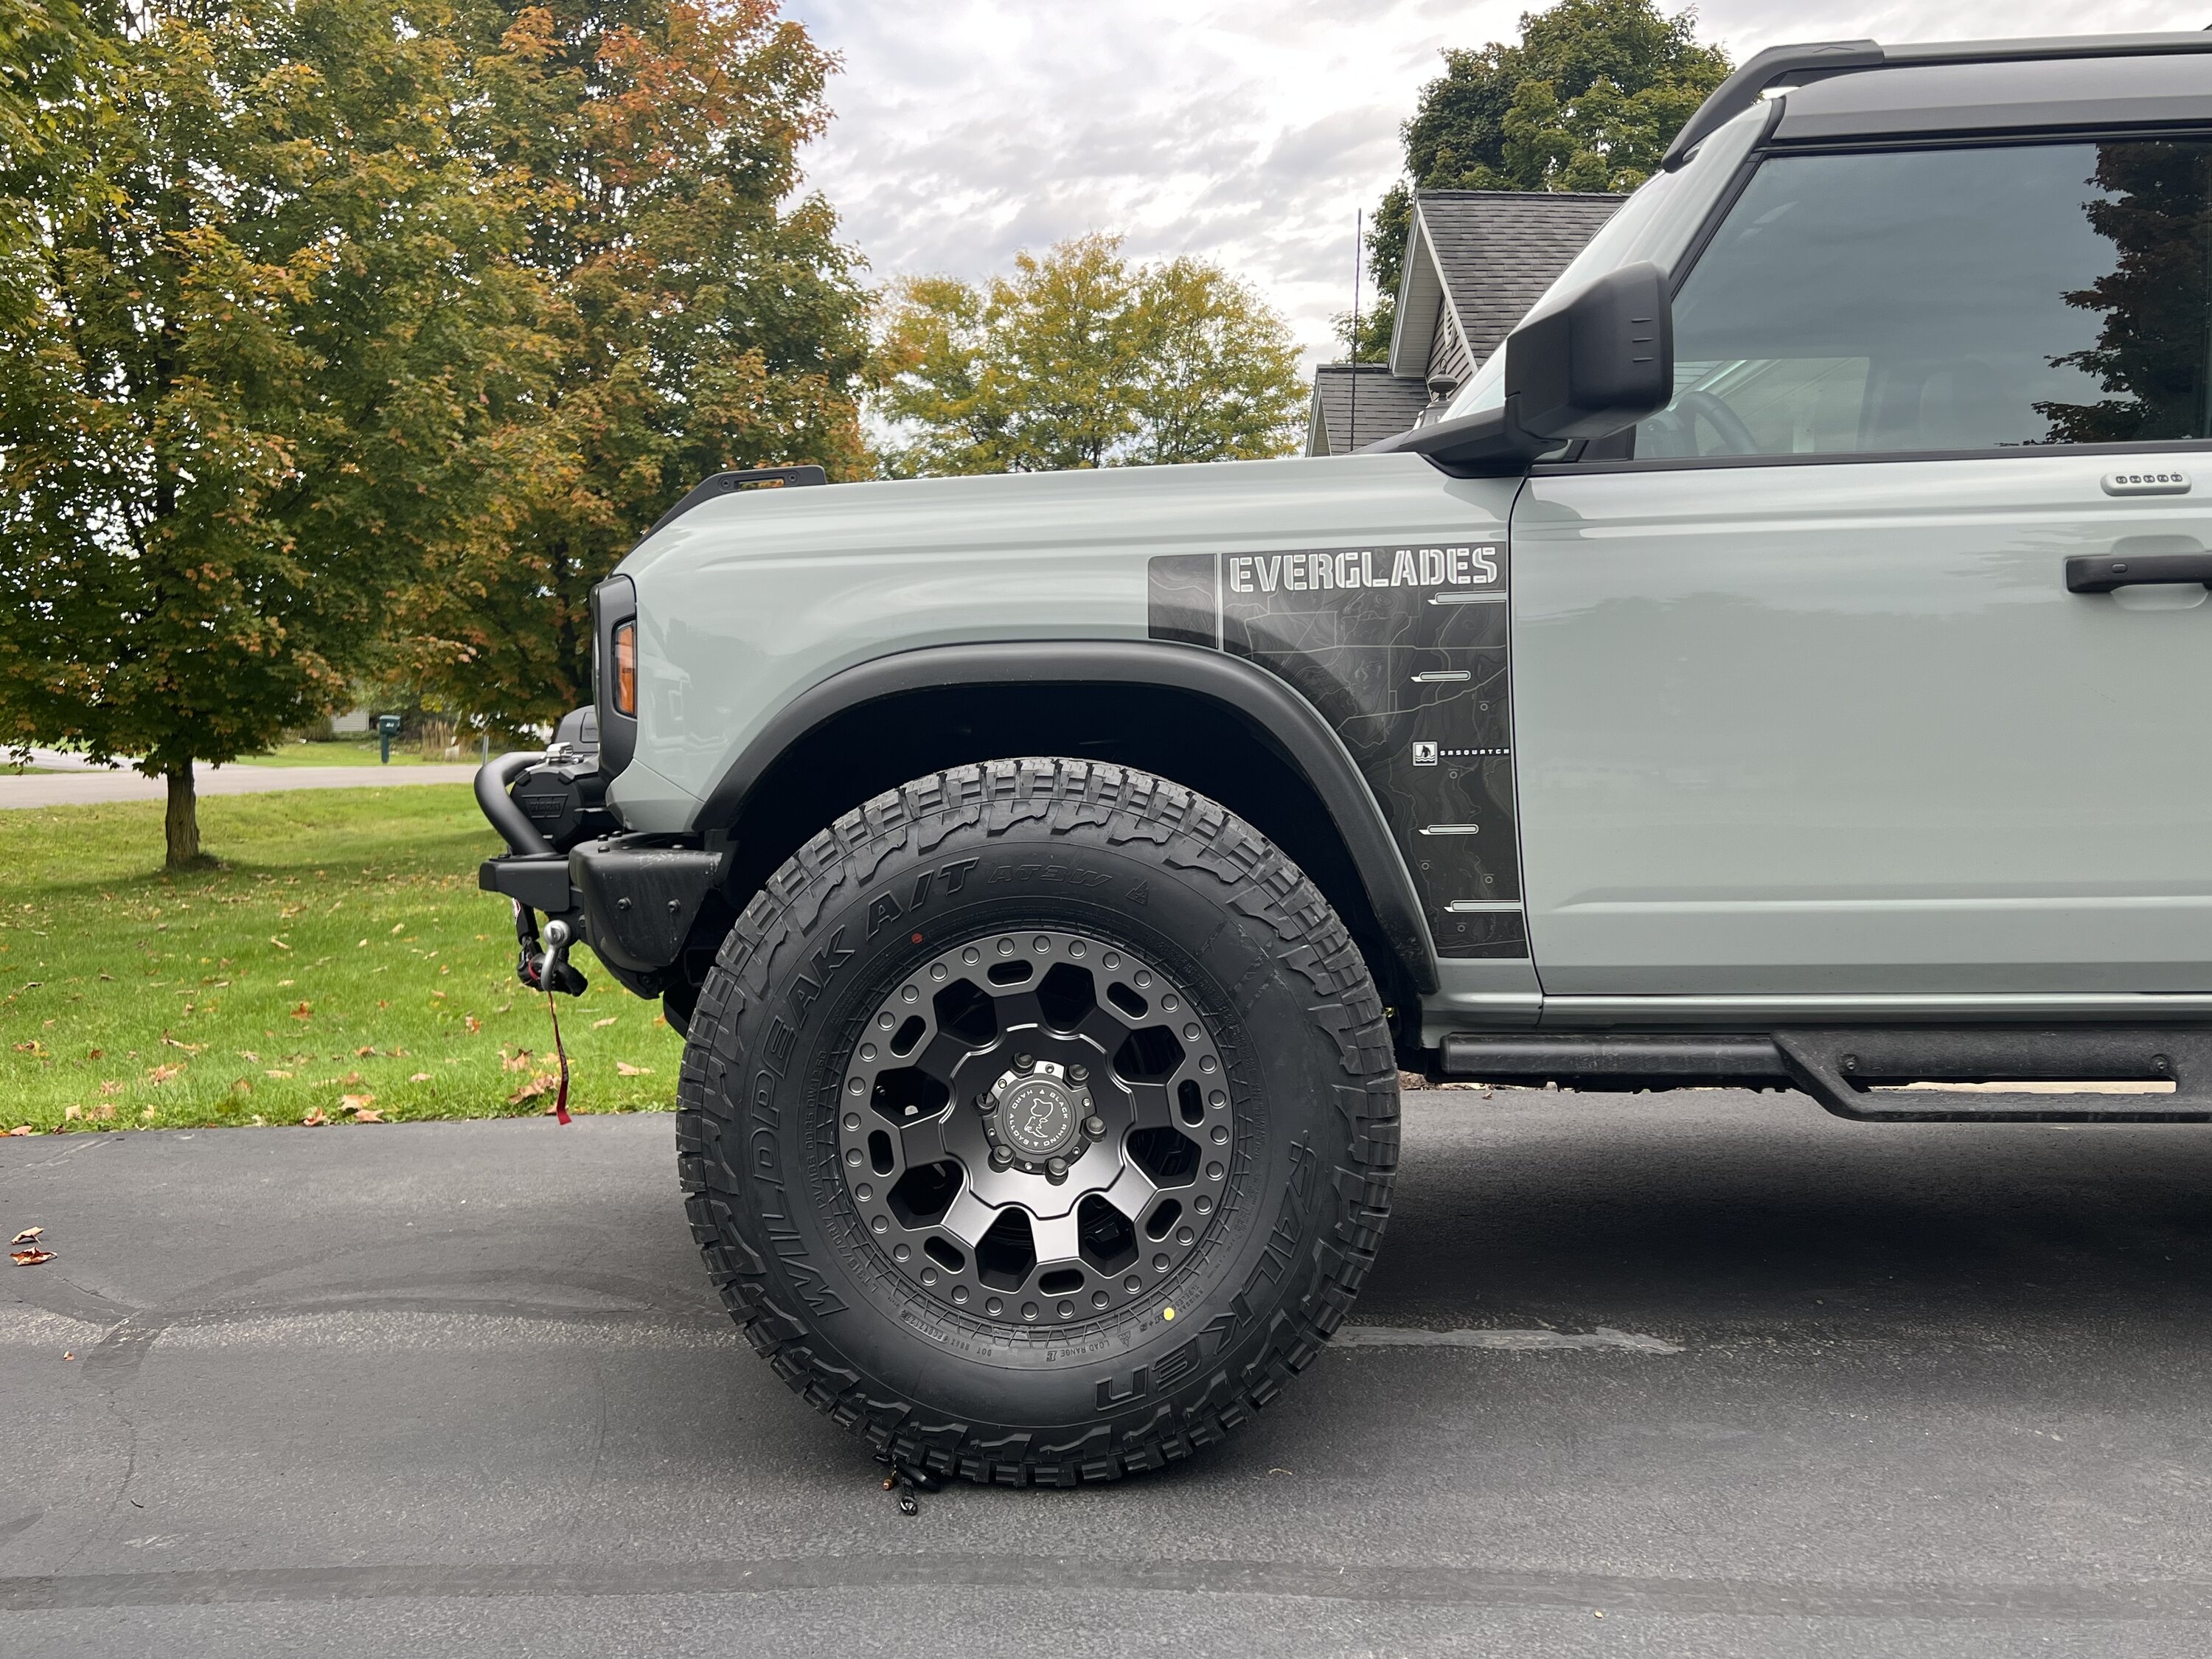 Ford Bronco Bronco Everglades wheels spec and part number? ADB989C3-E319-4623-8896-C77CBC934D7C